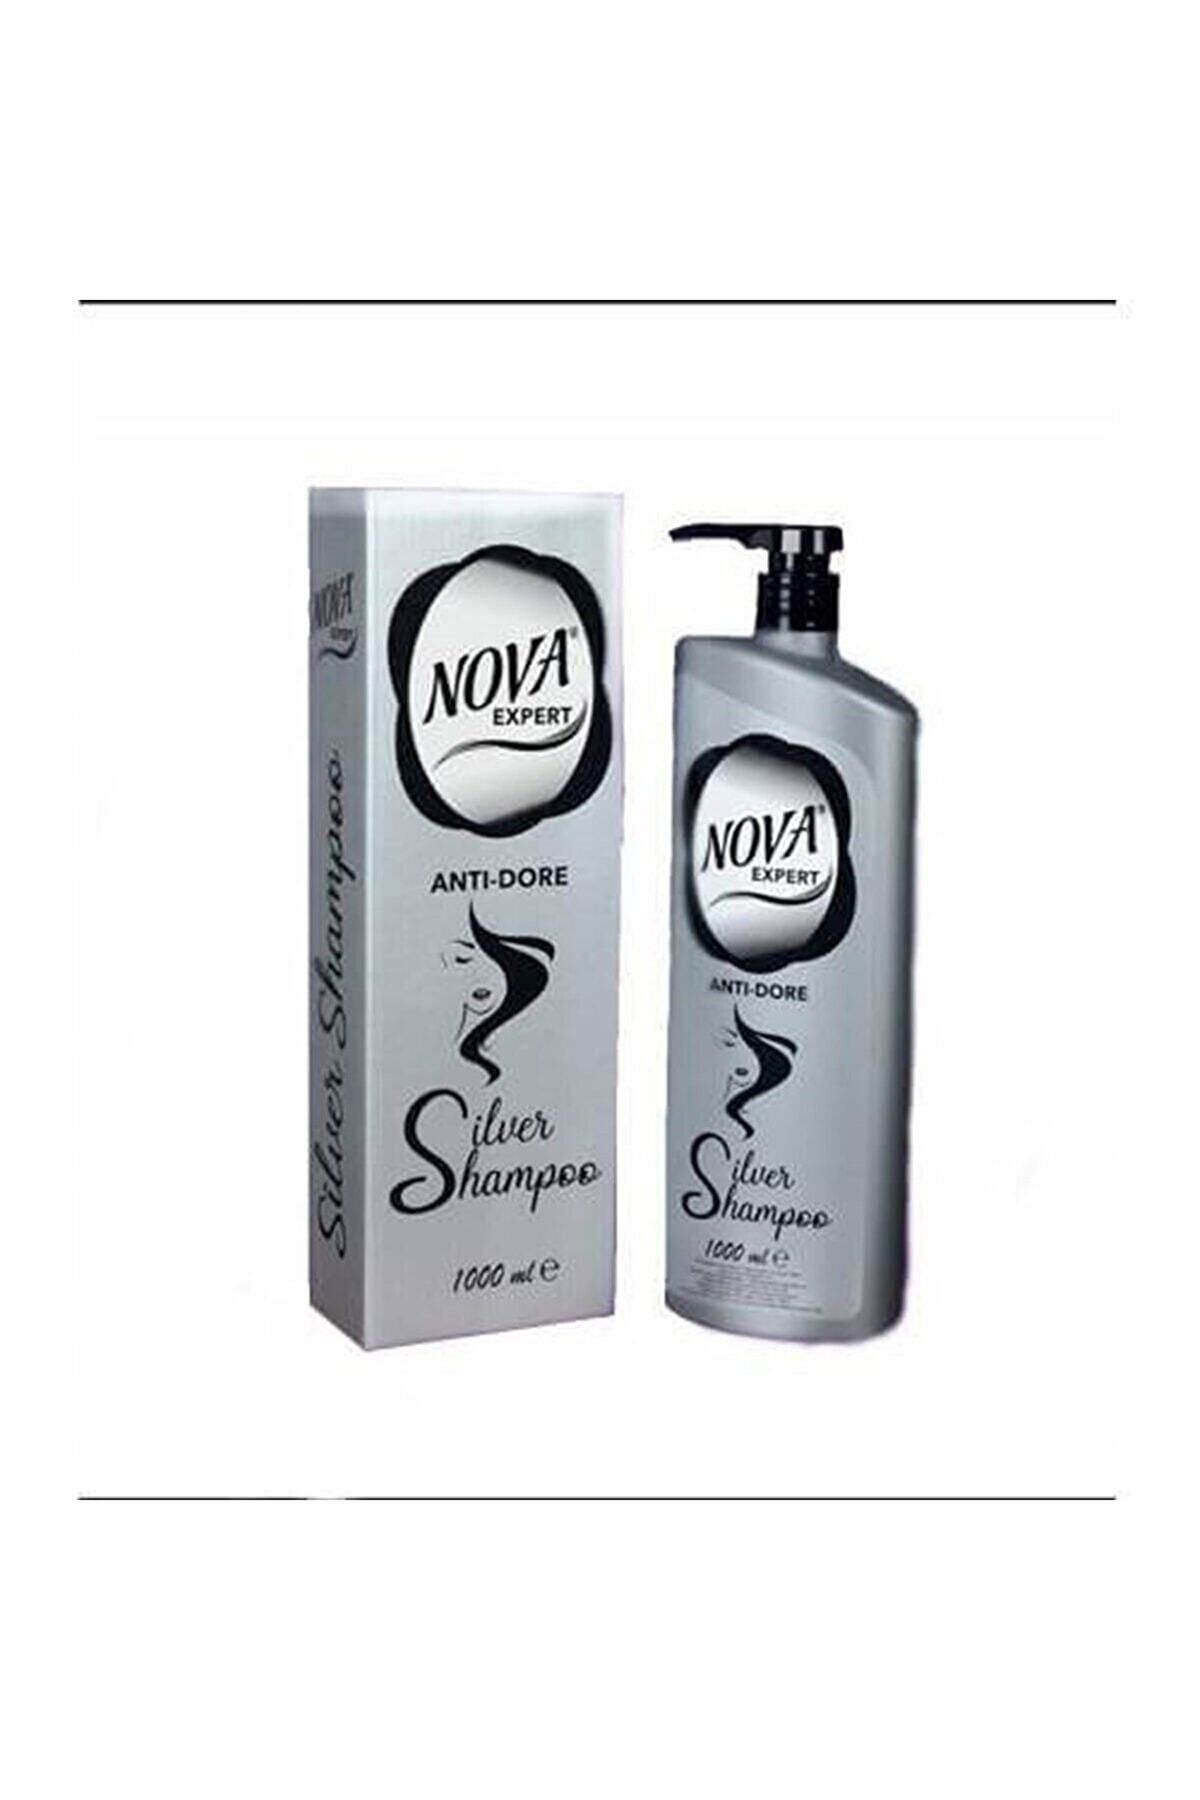 Nova Anti-dore Shampoo Silver Shampoo for White Hair 1000 Ml